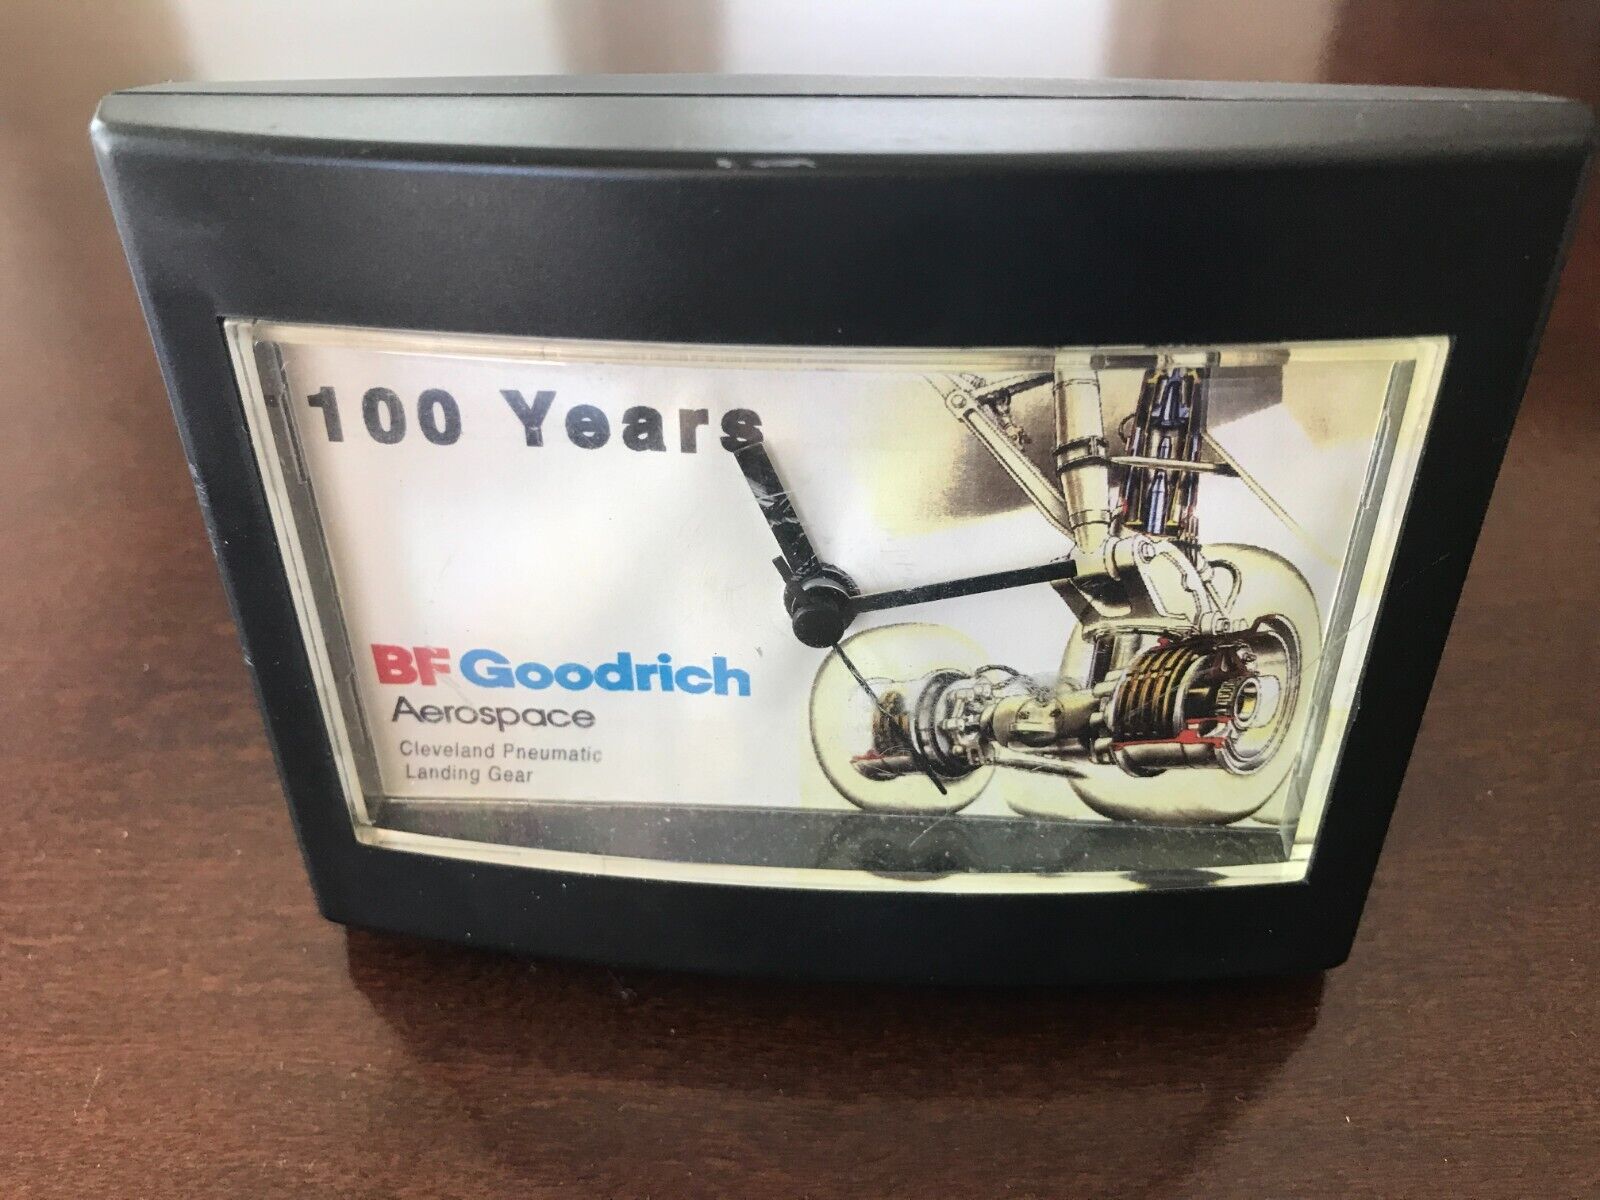 BFGoodrich Aerospace Cleveland Pneumatic Landing Gear 100 Year Anniversary Clock